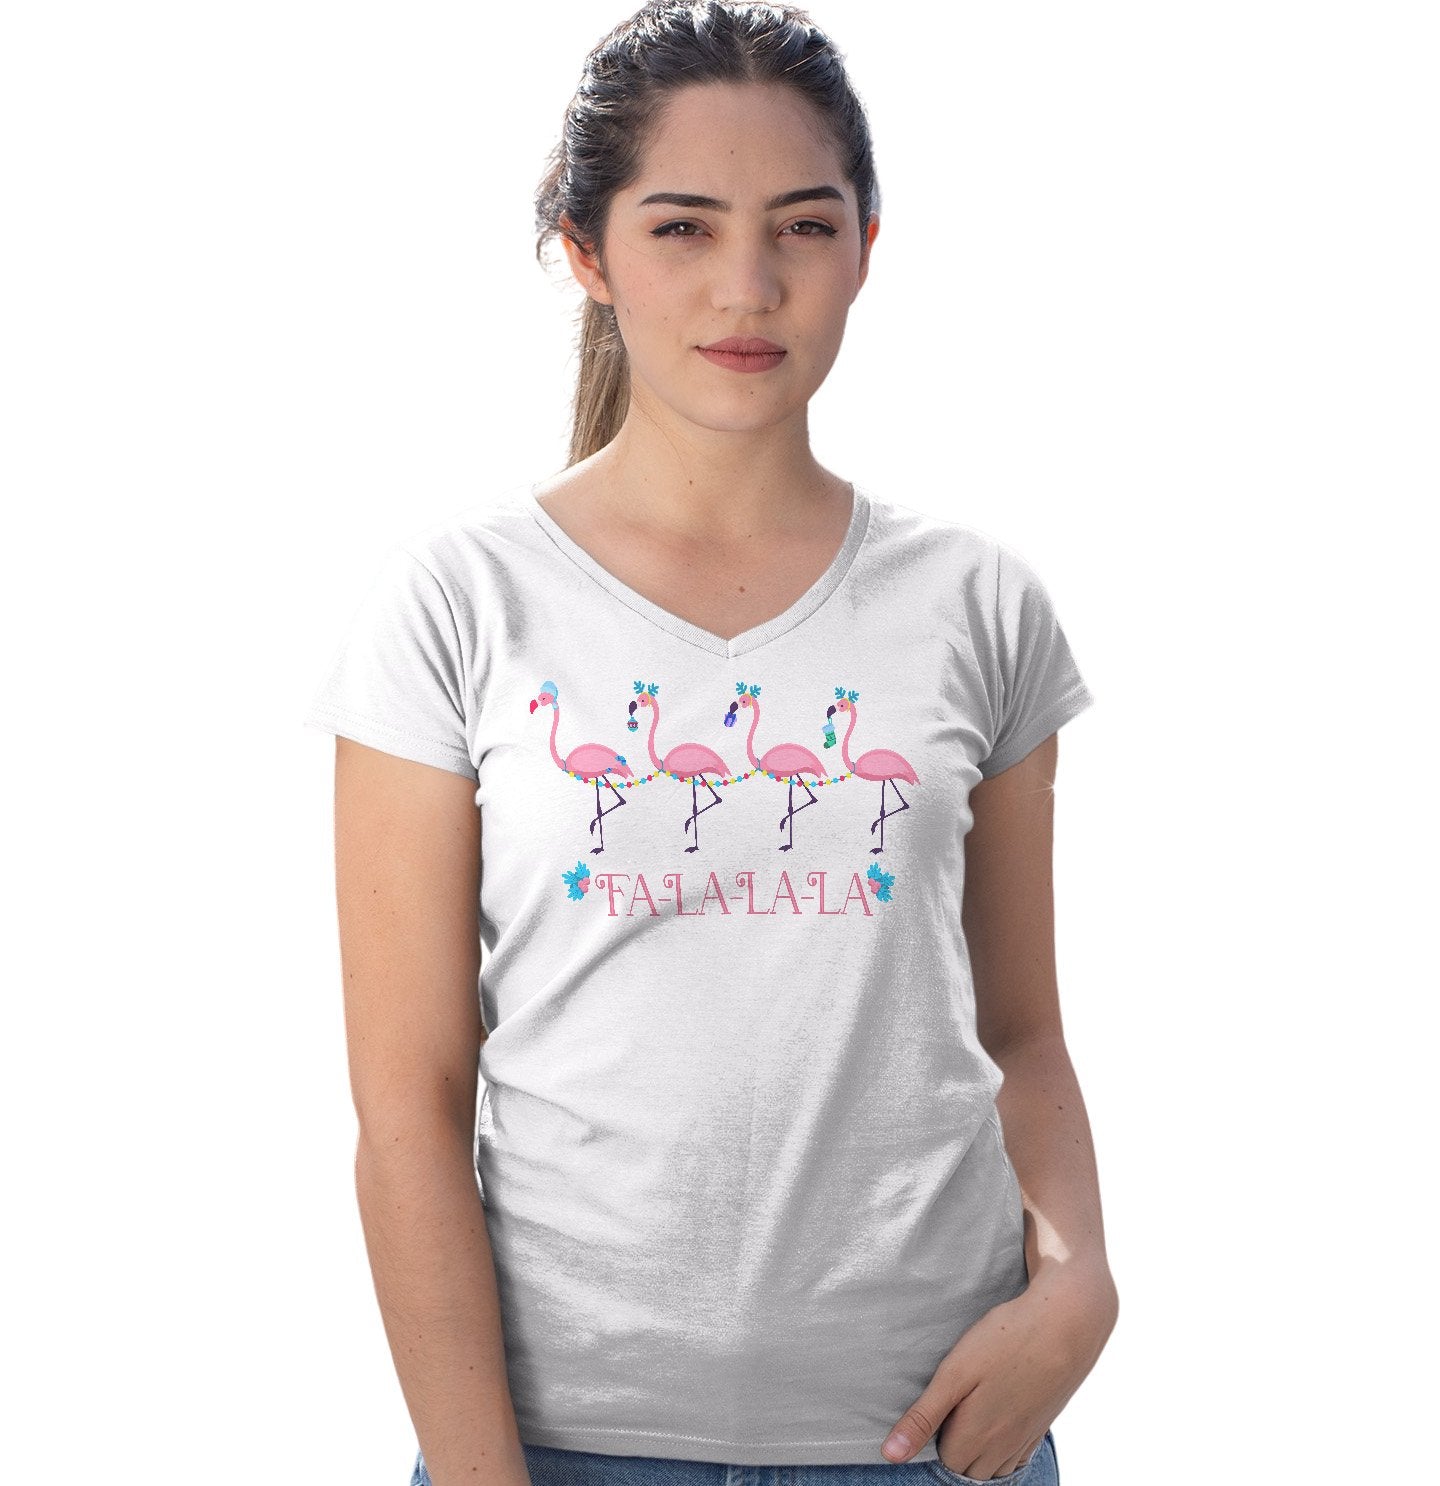 Animal Pride - Falalamingos - Women's V-Neck T-Shirt